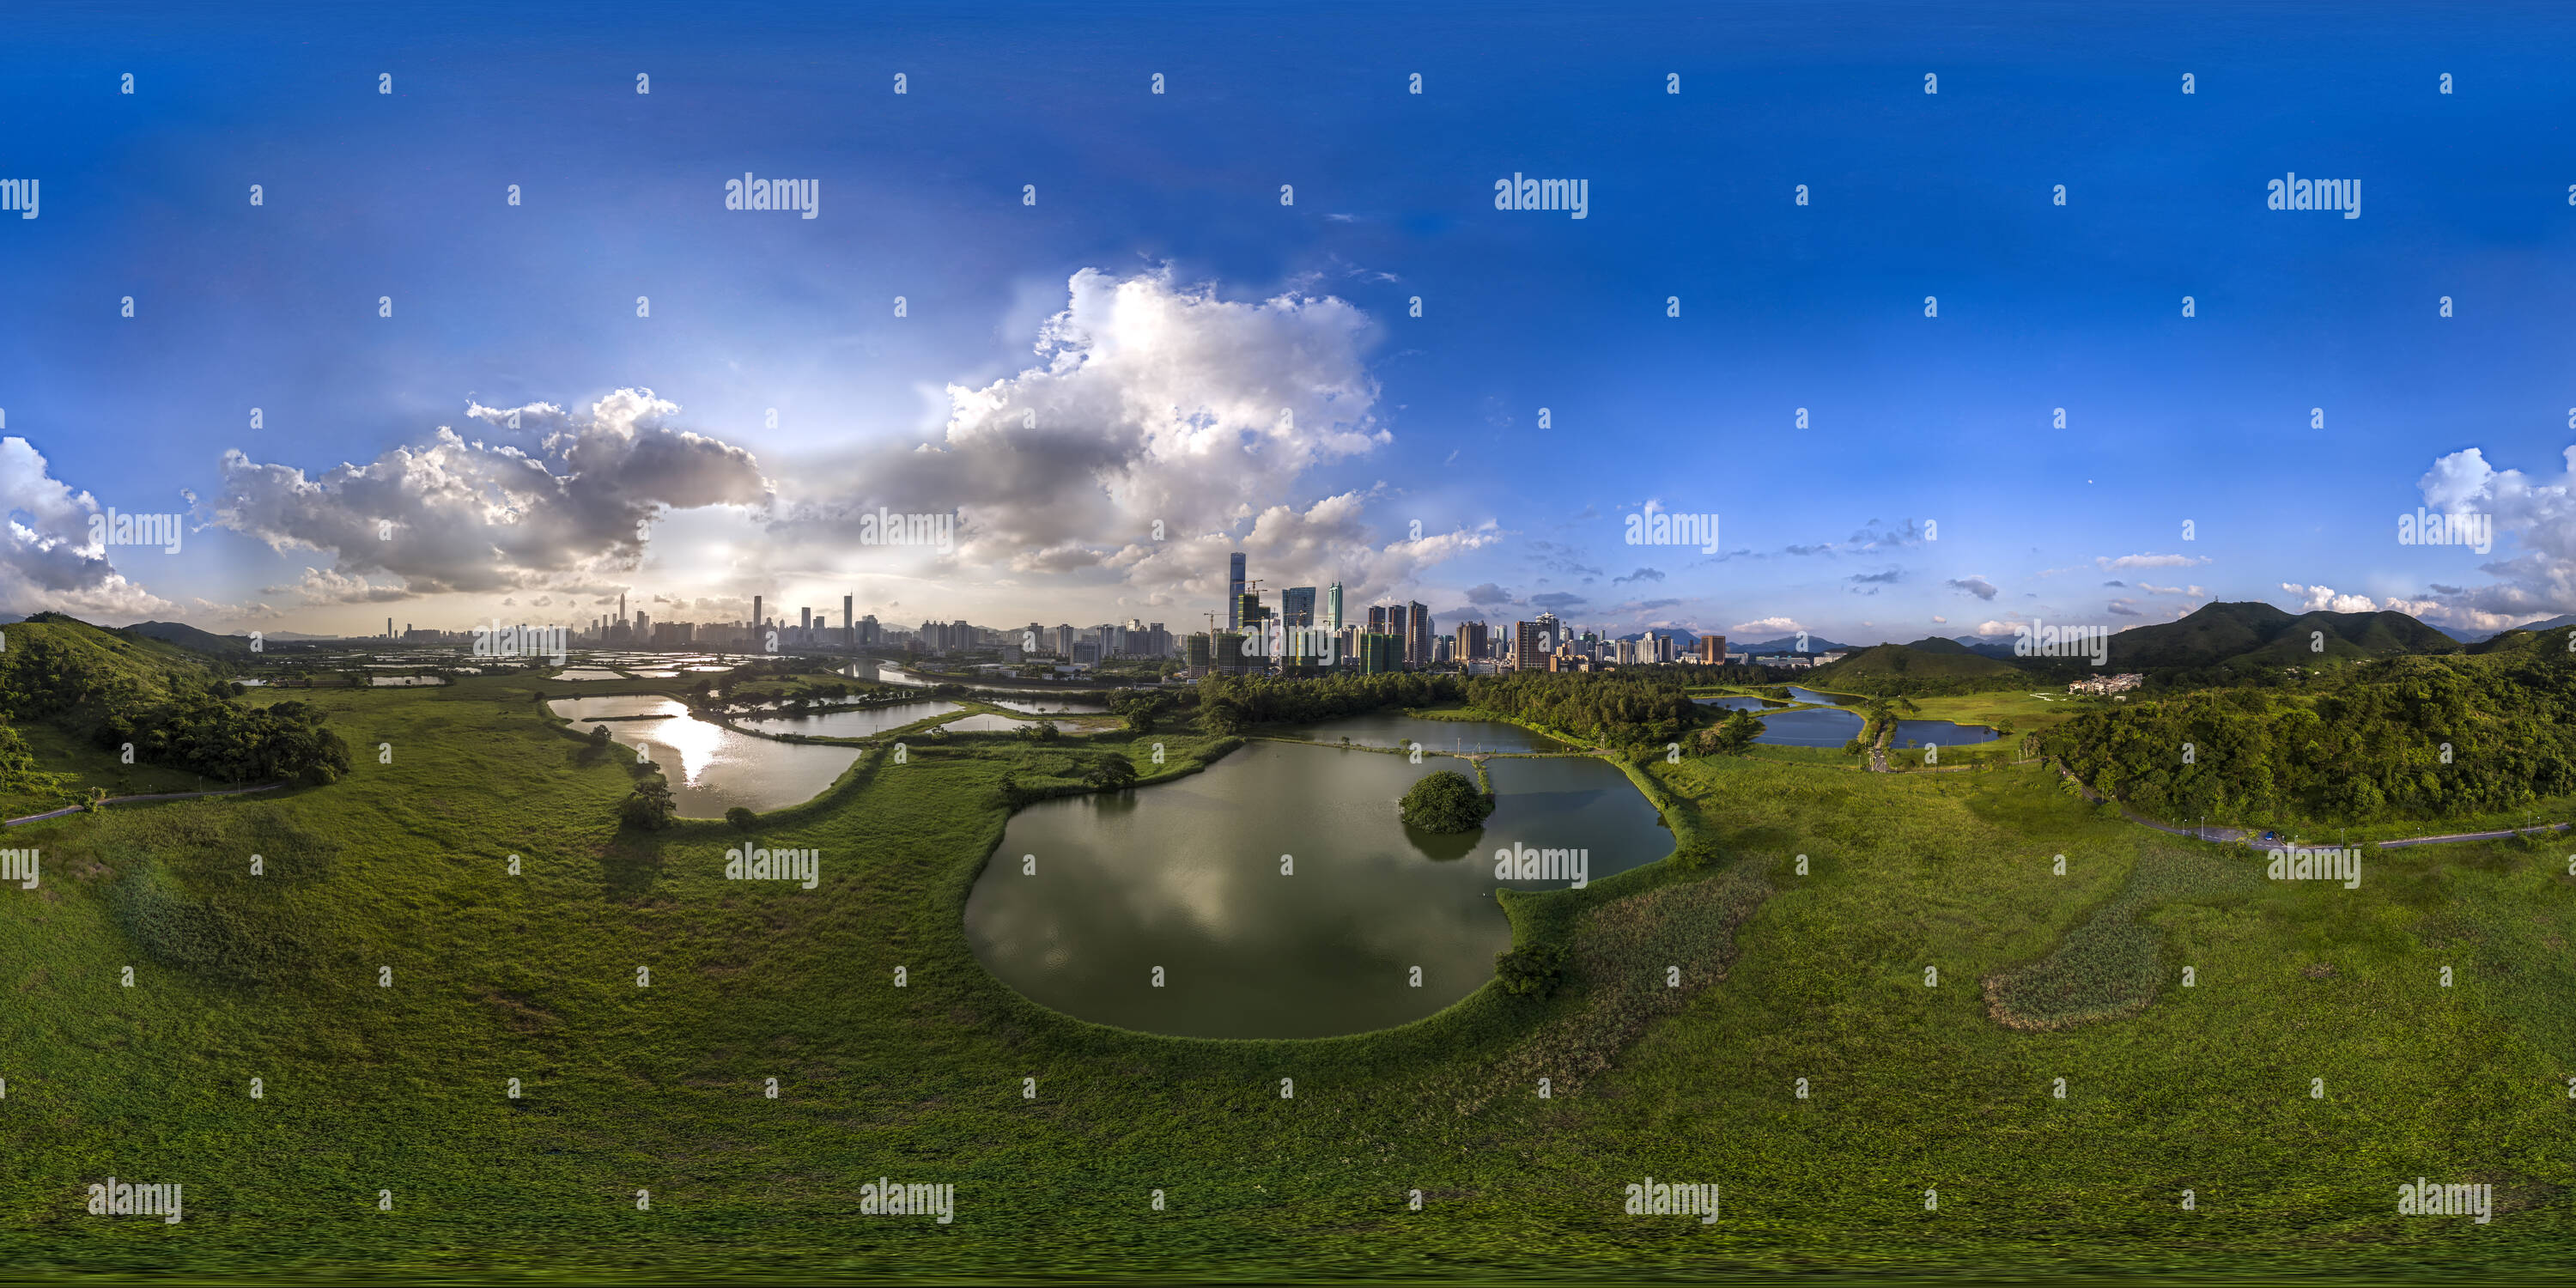 Visualizzazione panoramica a 360 gradi di Hong Kong frontiera(中港邊境)